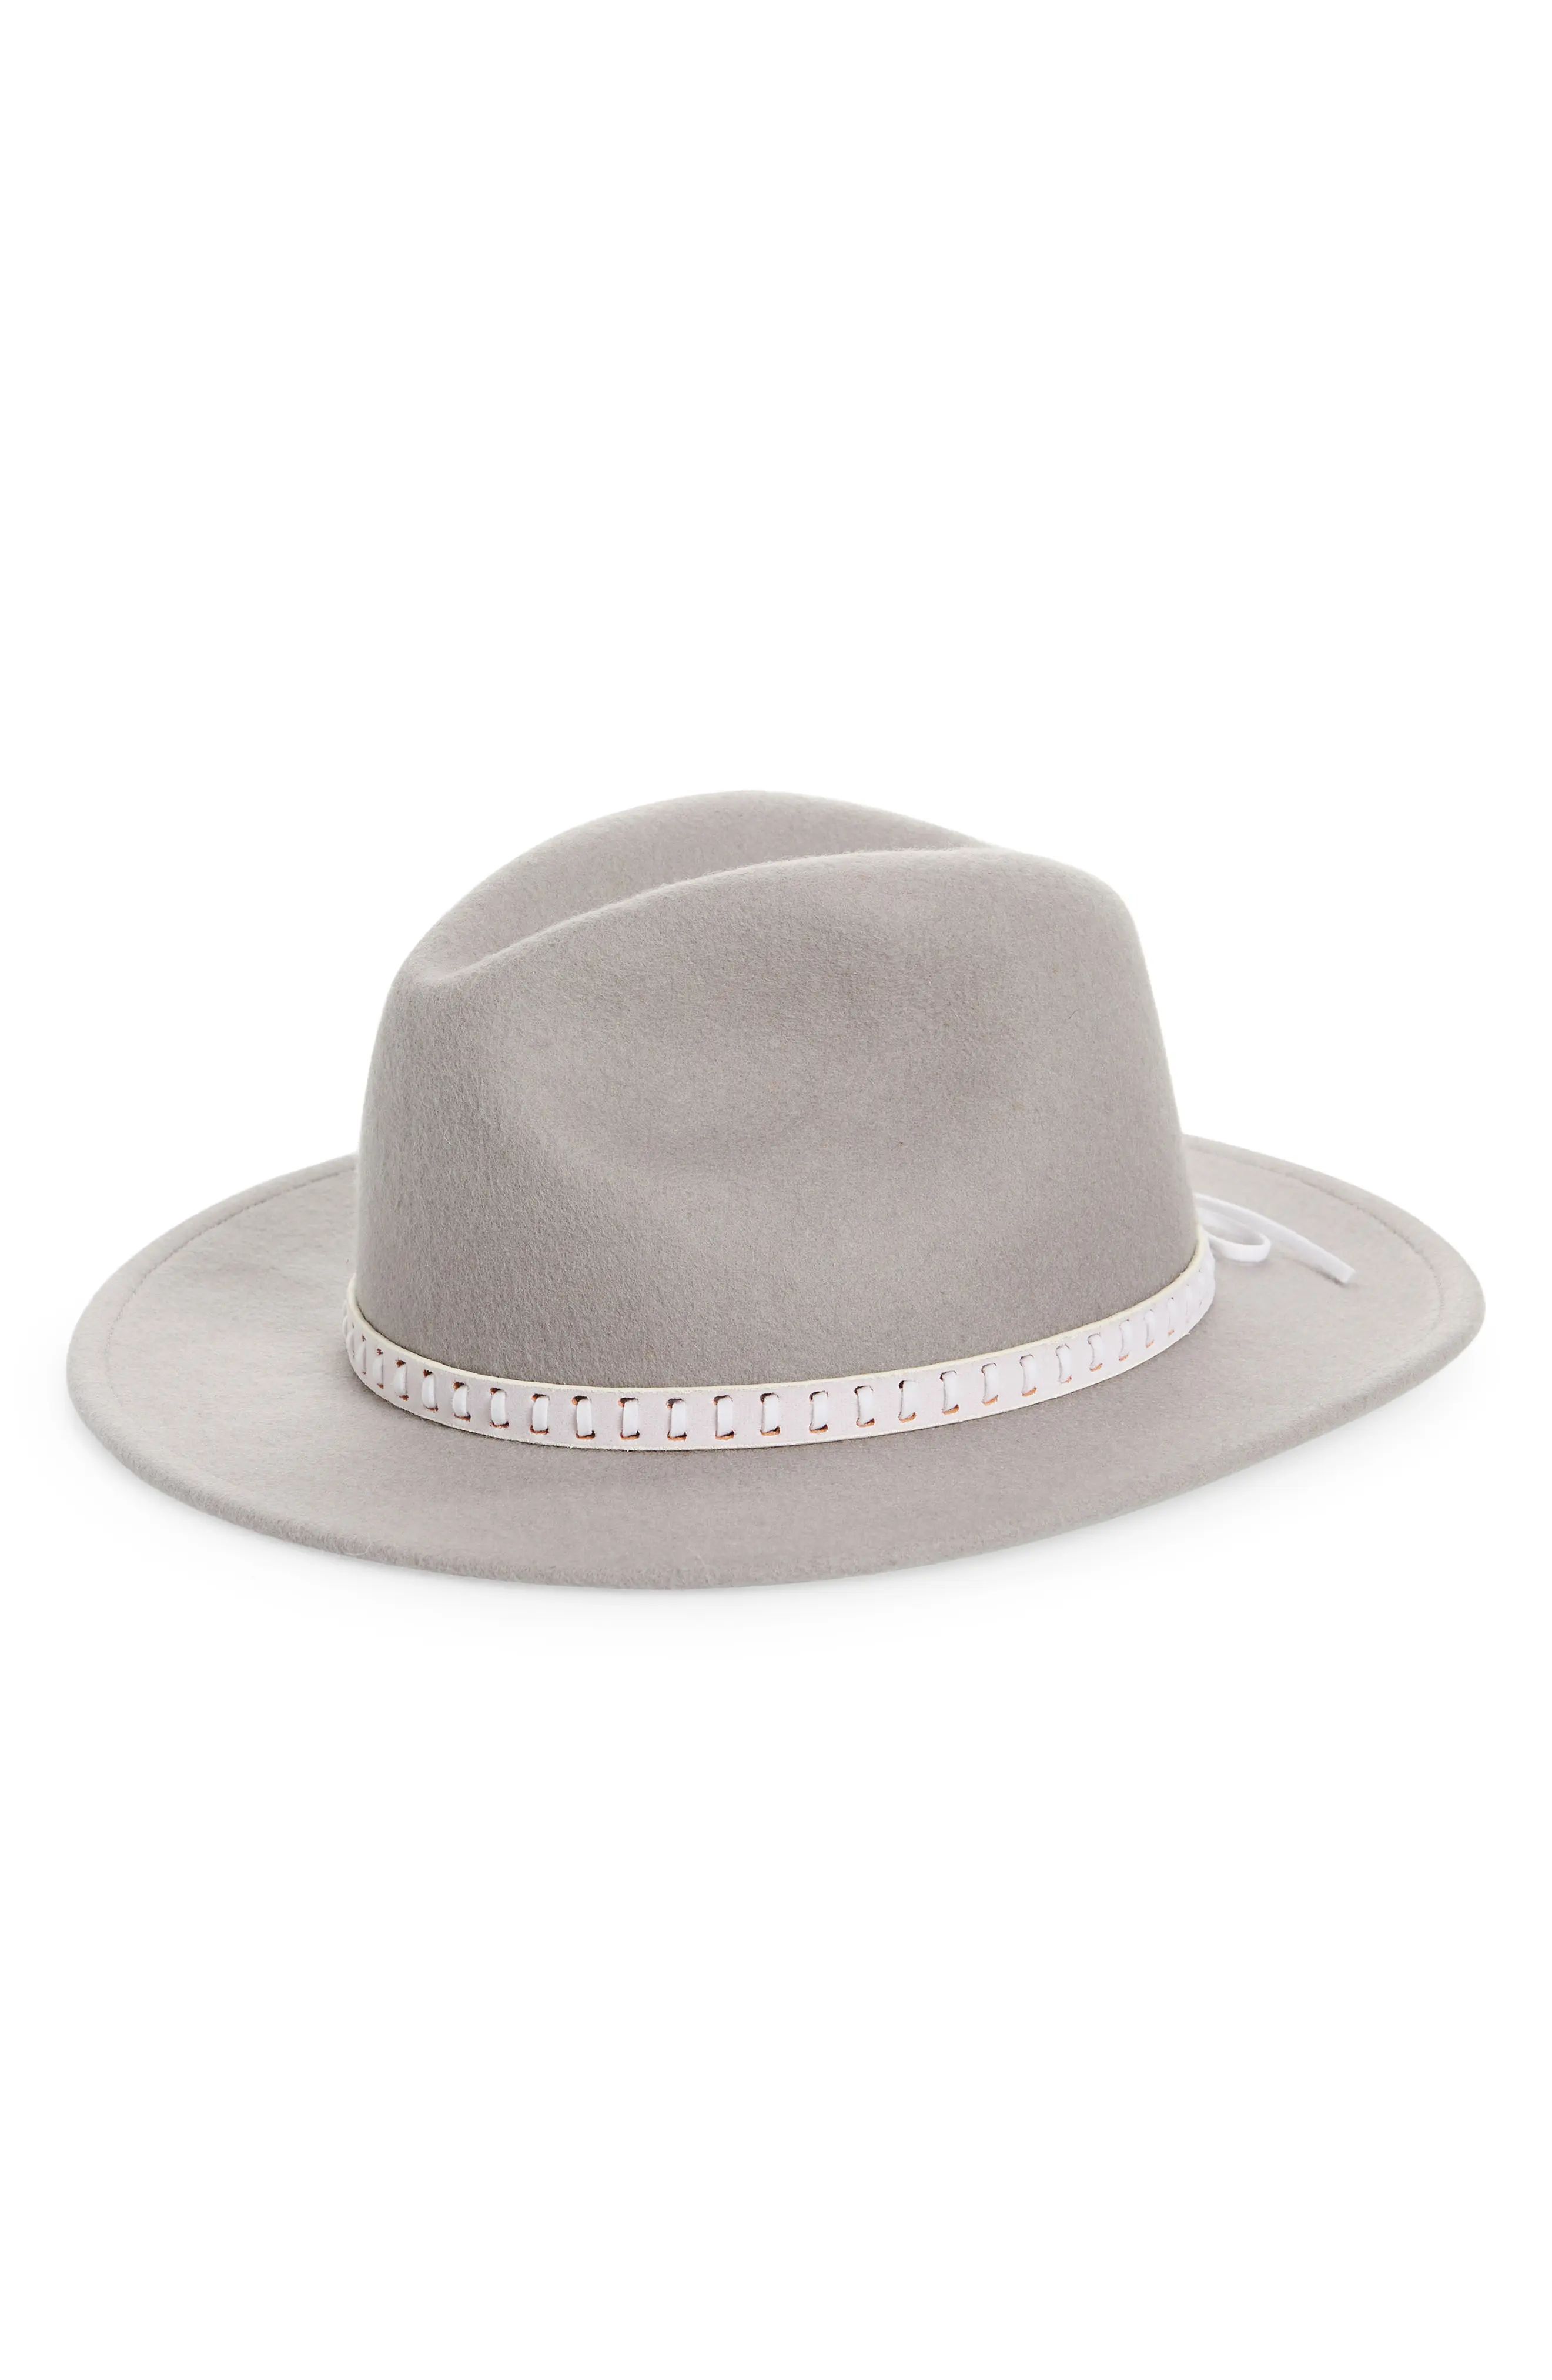 Treasure & Bond Felt Panama Hat in Grey Light Combo at Nordstrom | Nordstrom